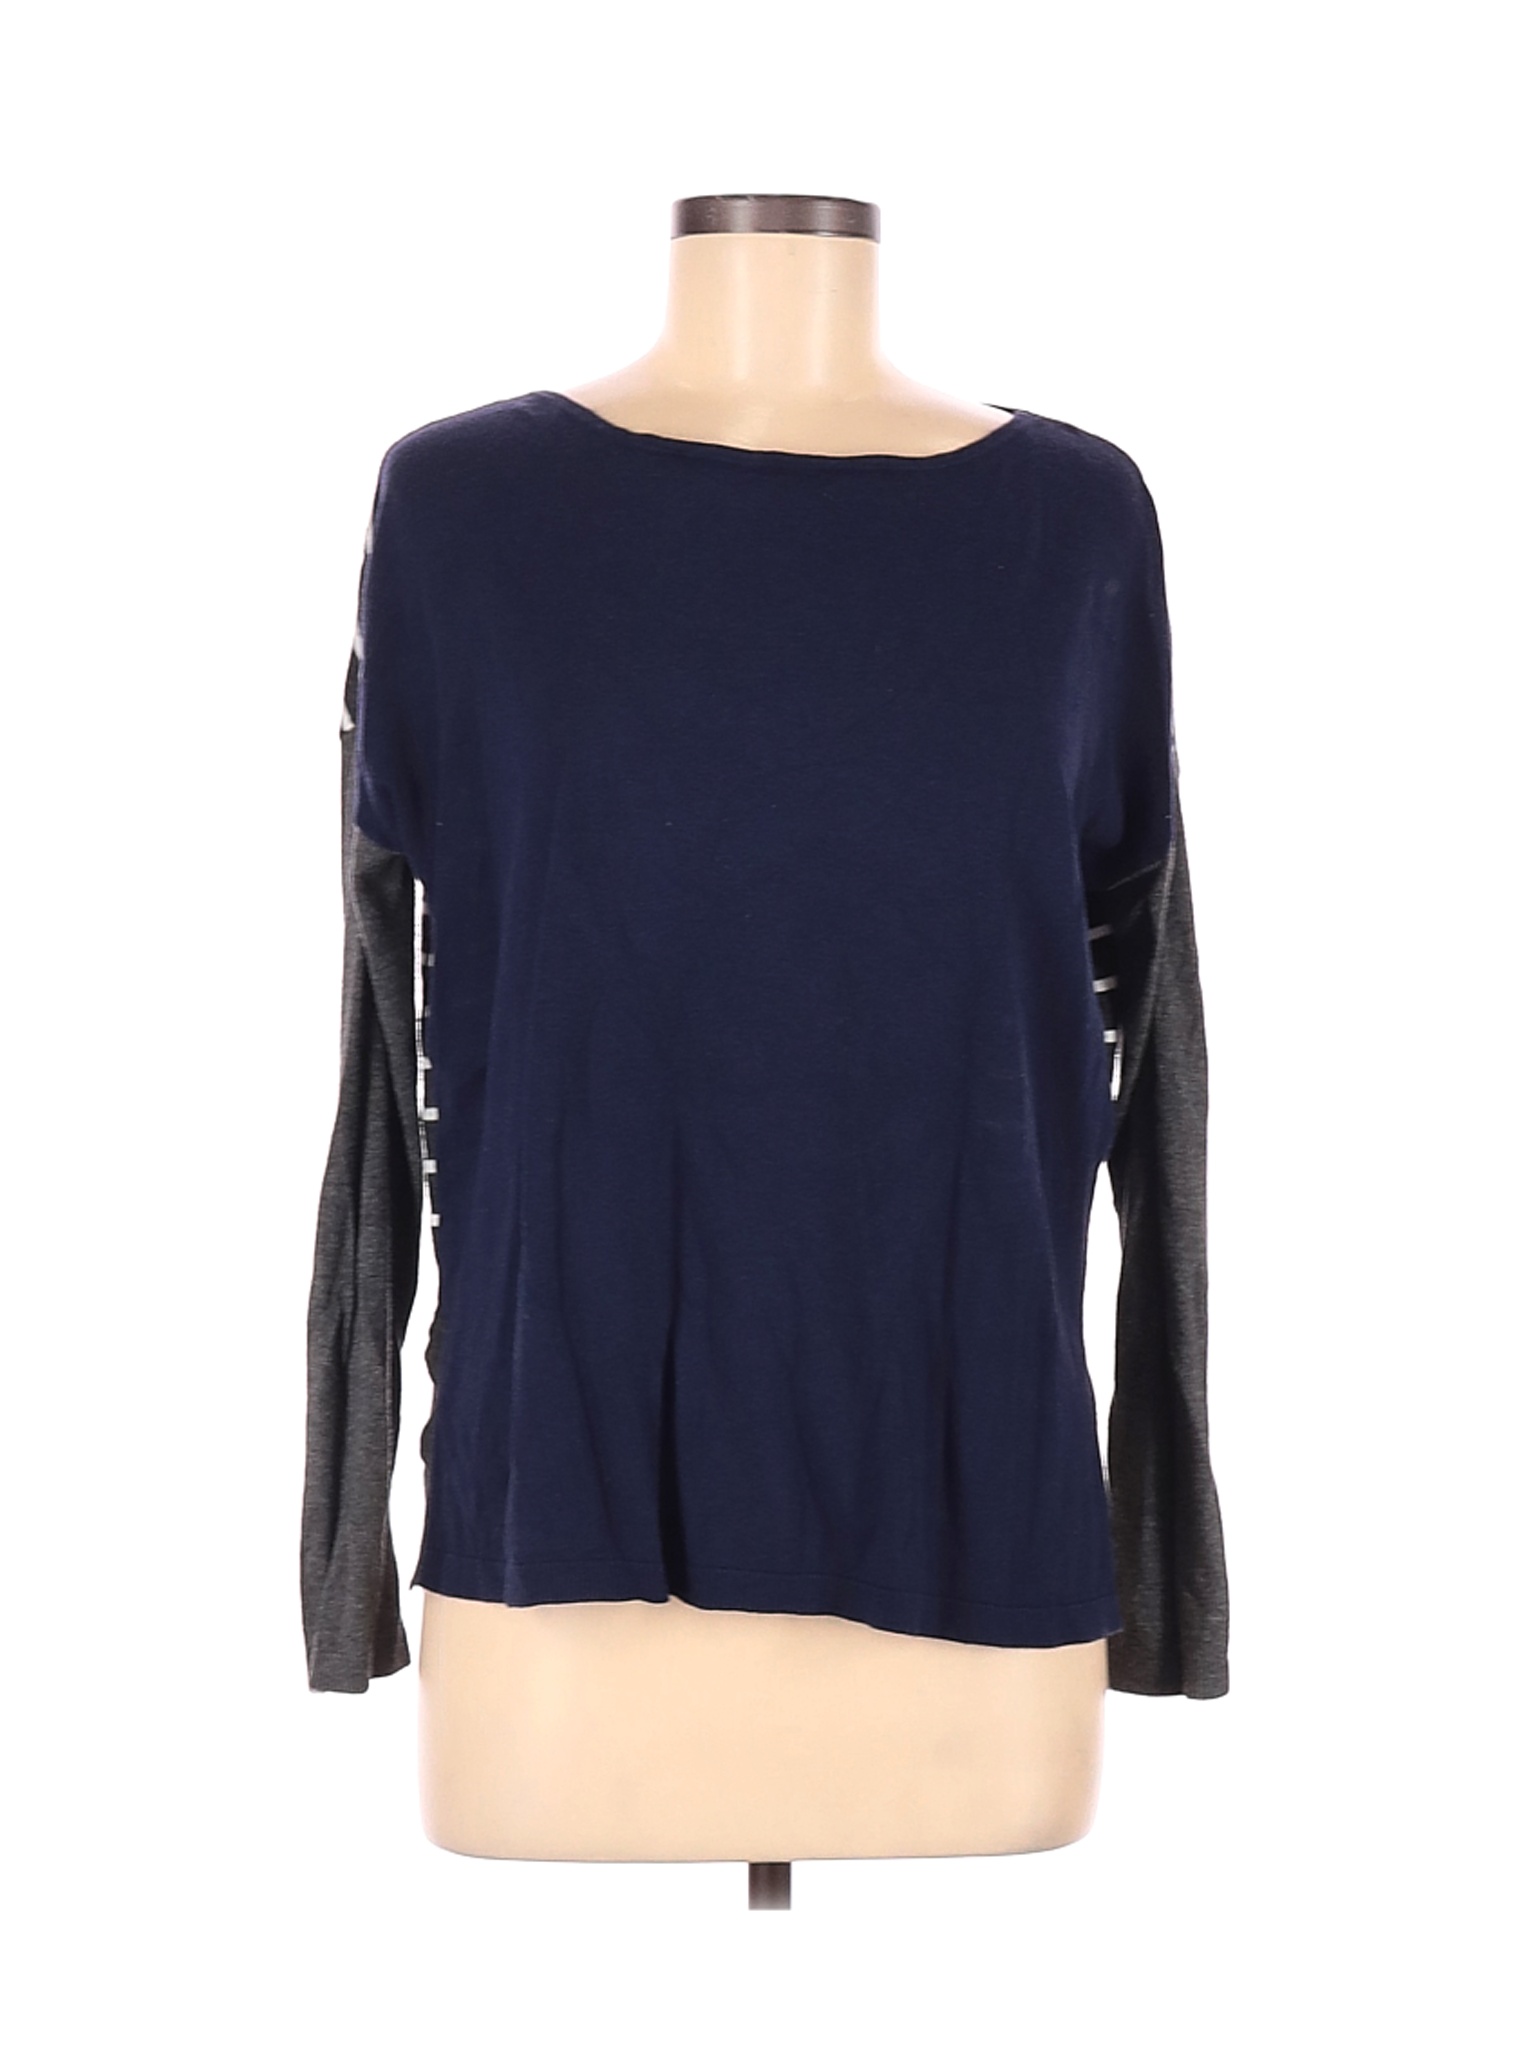 Old Navy Women Blue Pullover Sweater M | eBay